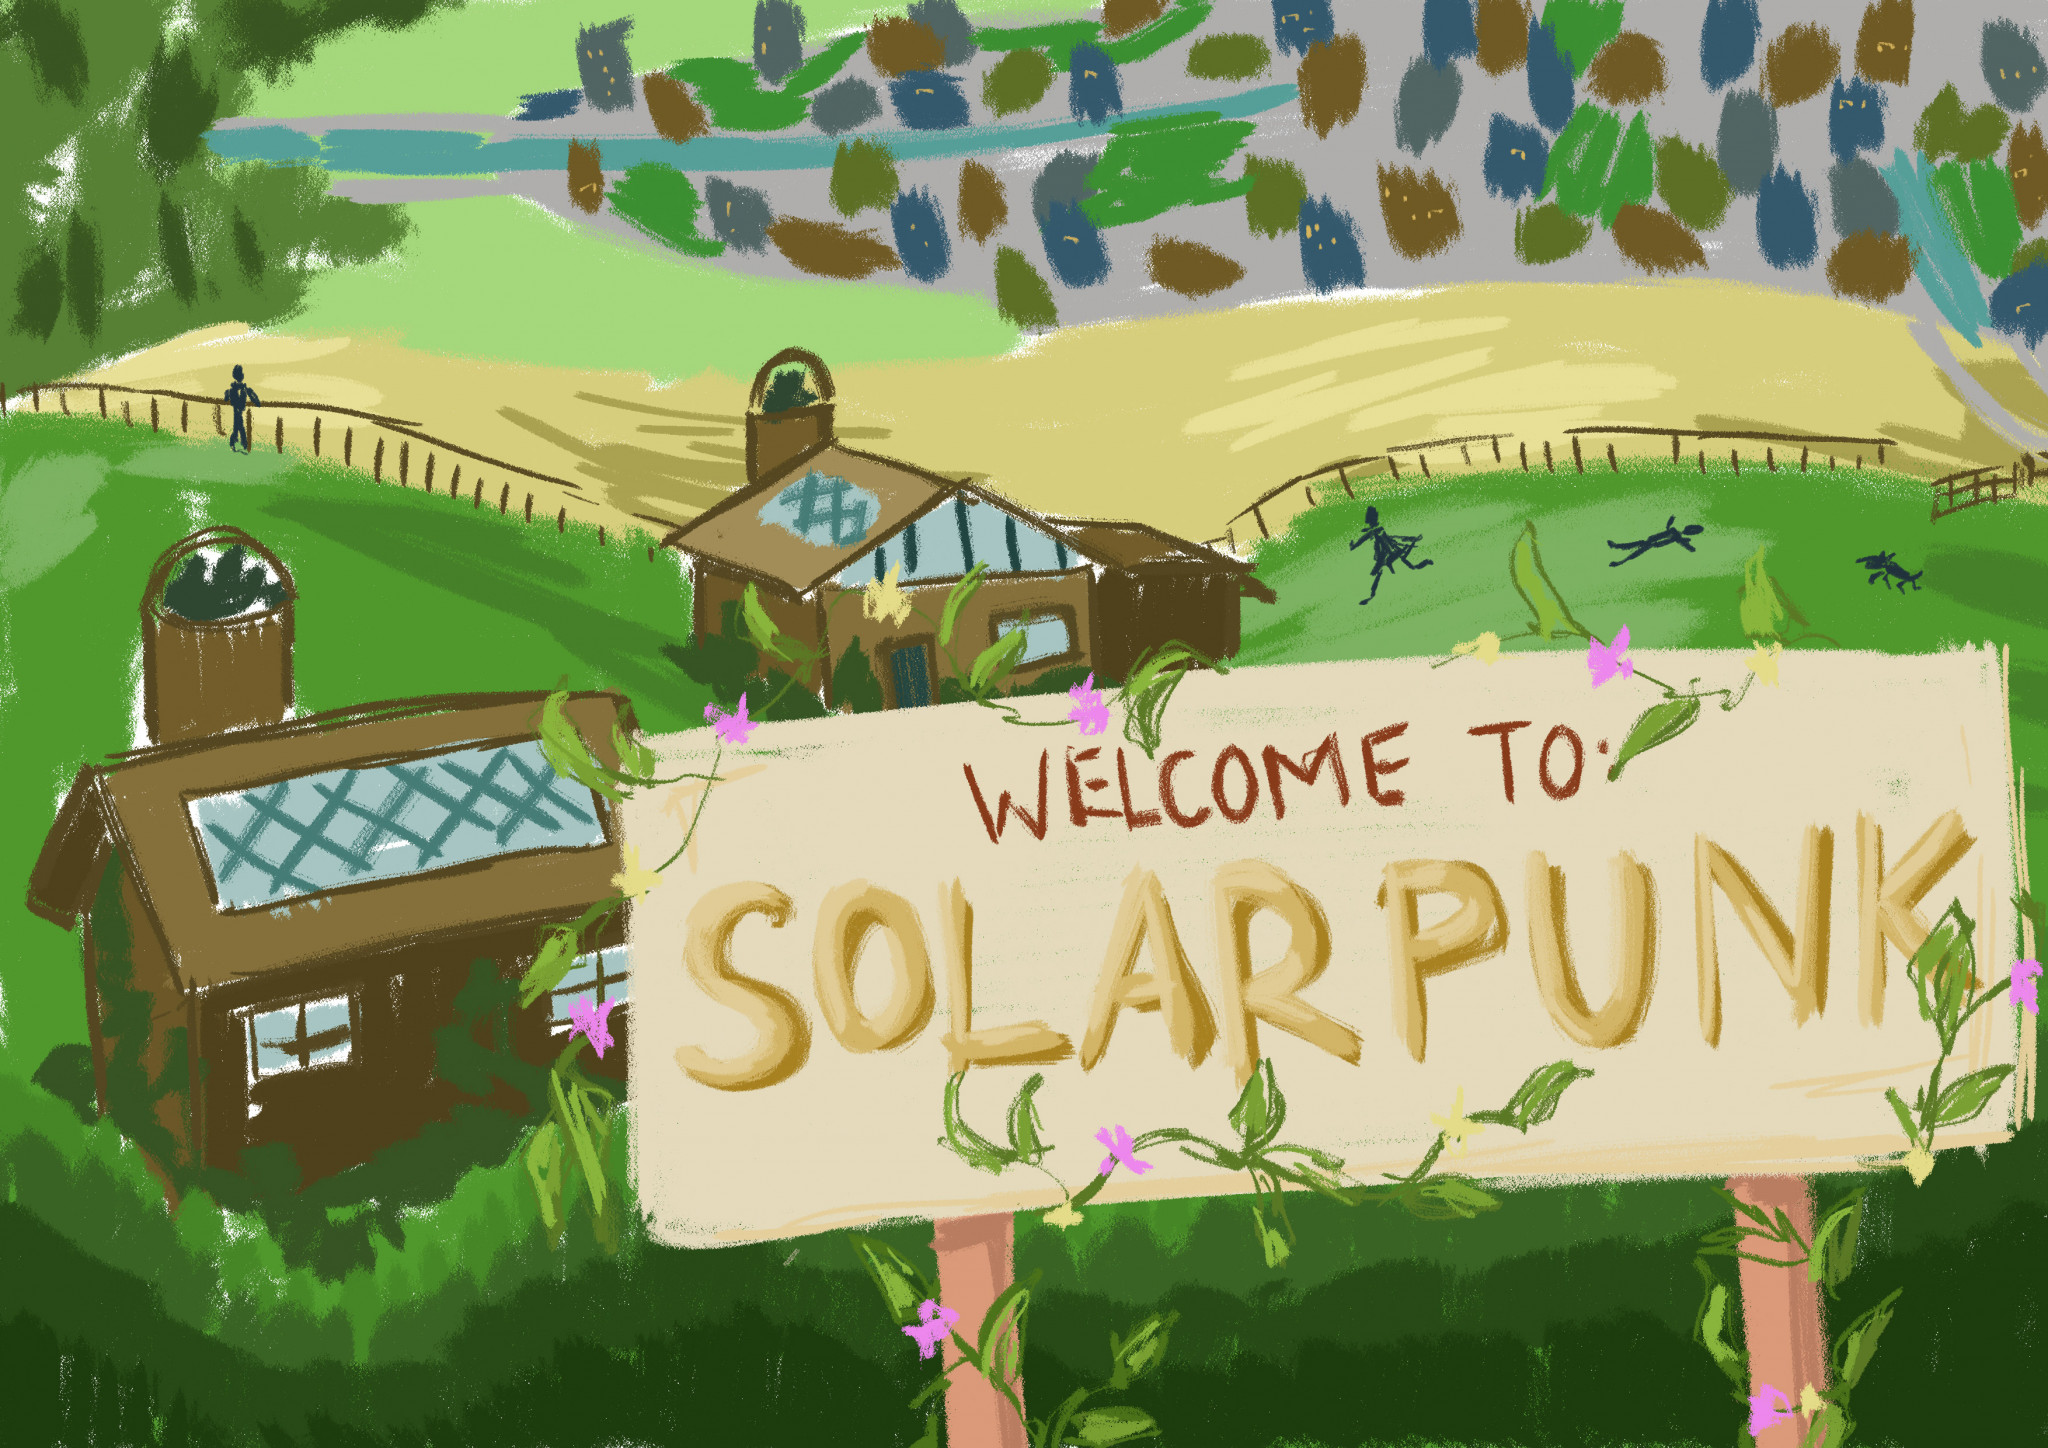 An Introduction to Solarpunk